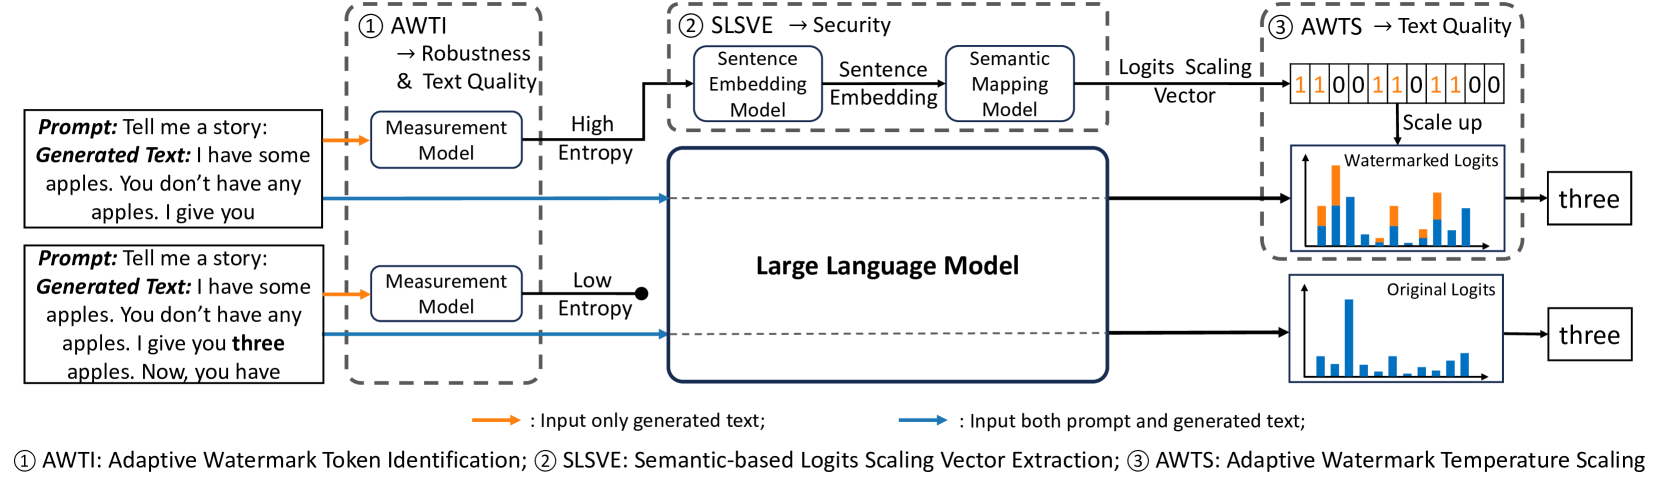 Adaptive Text Watermark for Large Language Models